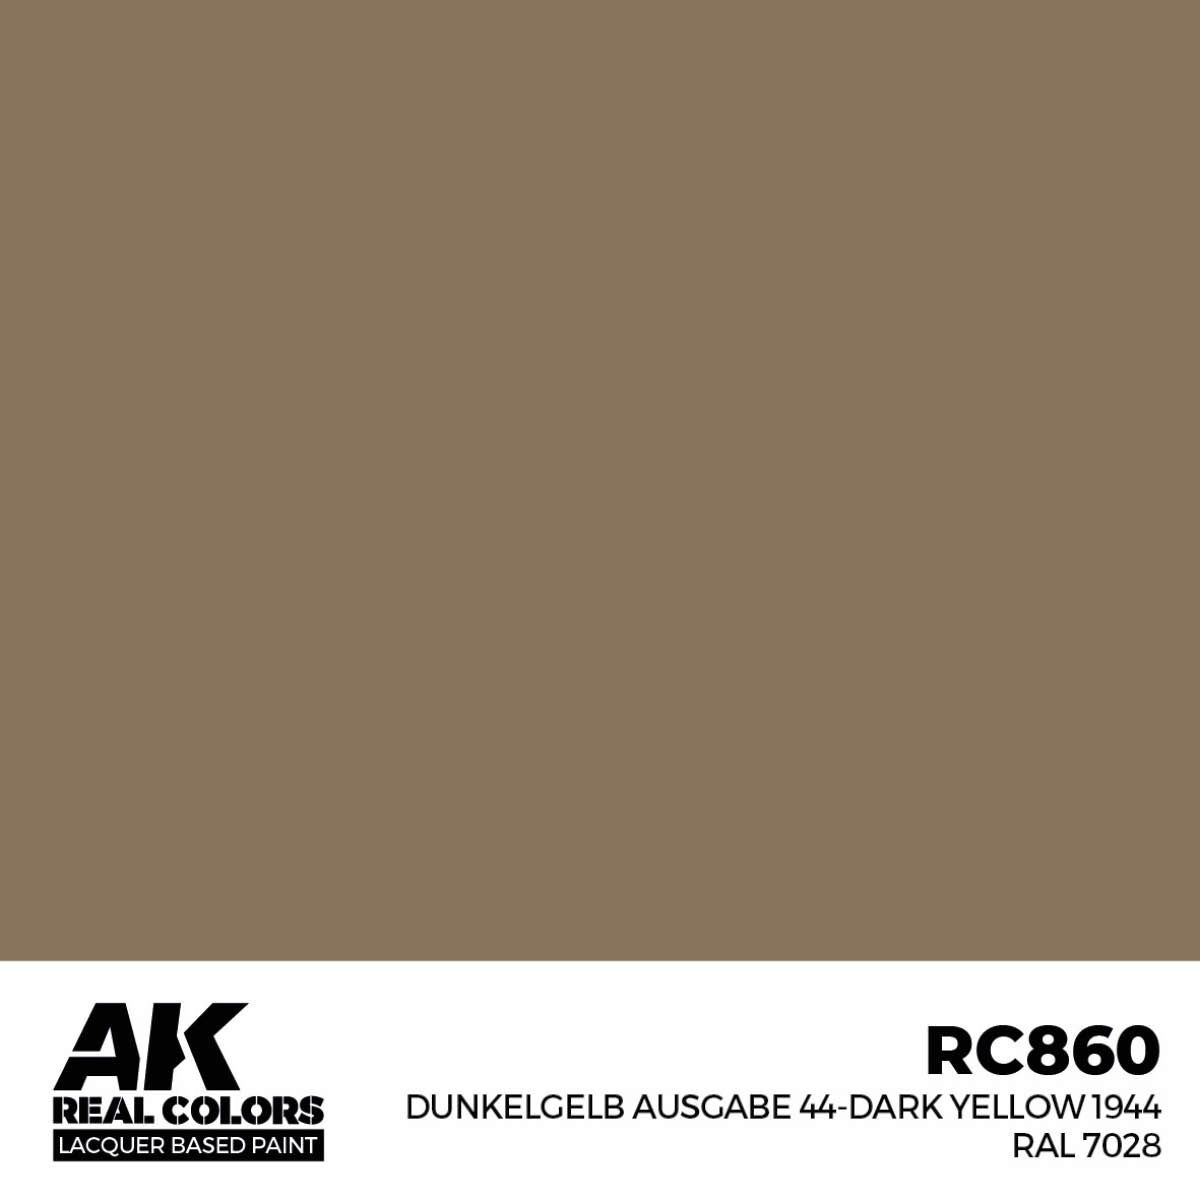 AK RC860 Real Colors Dunkelgelb Ausgabe 44-Dark Yellow 1944 RAL 7028 17 ml.